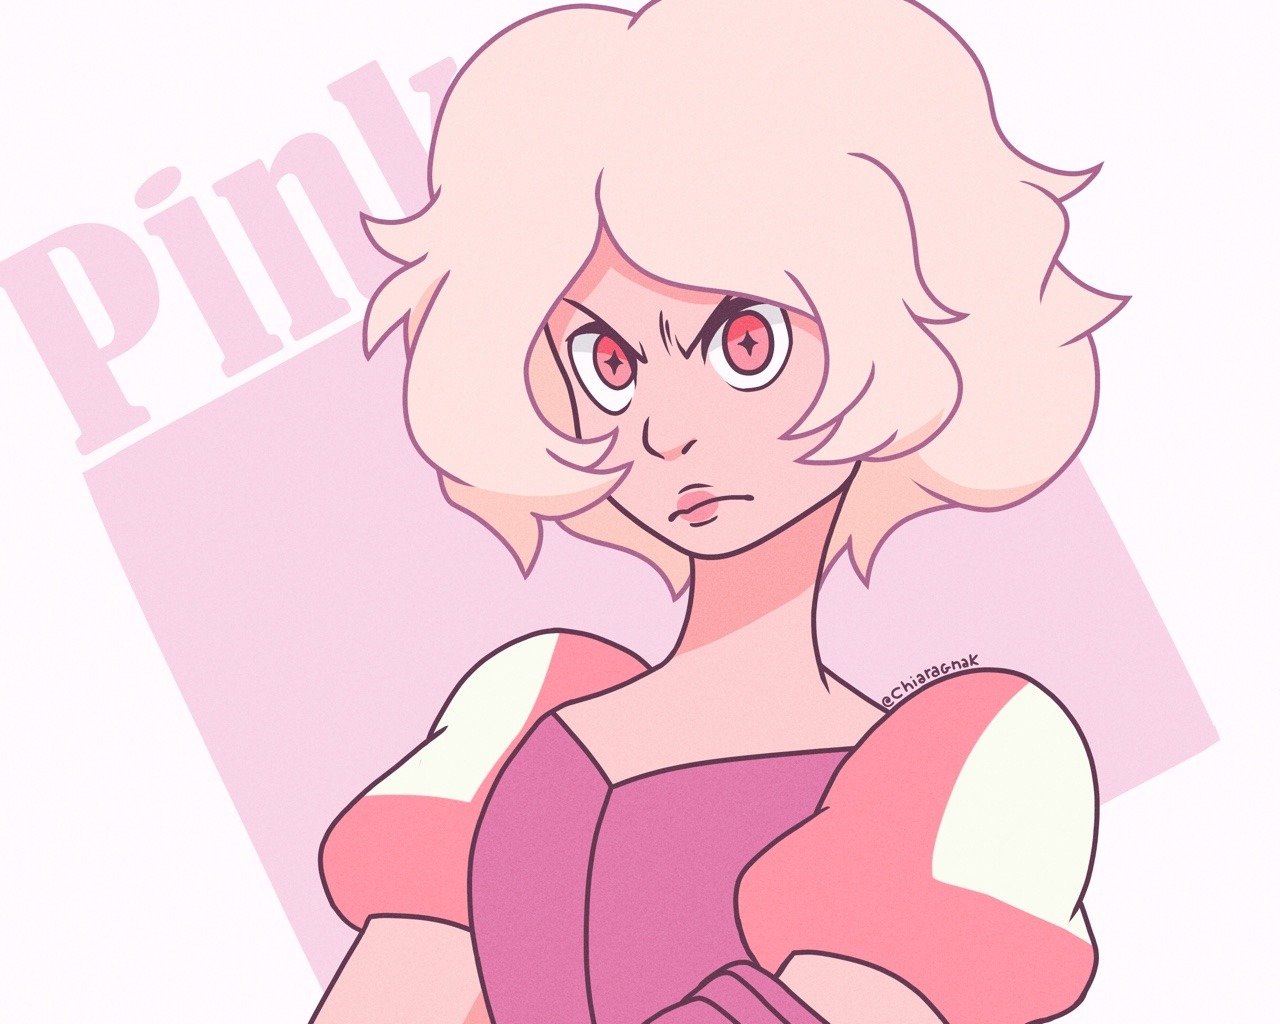 Pink diamond, aka the little brat (jk)